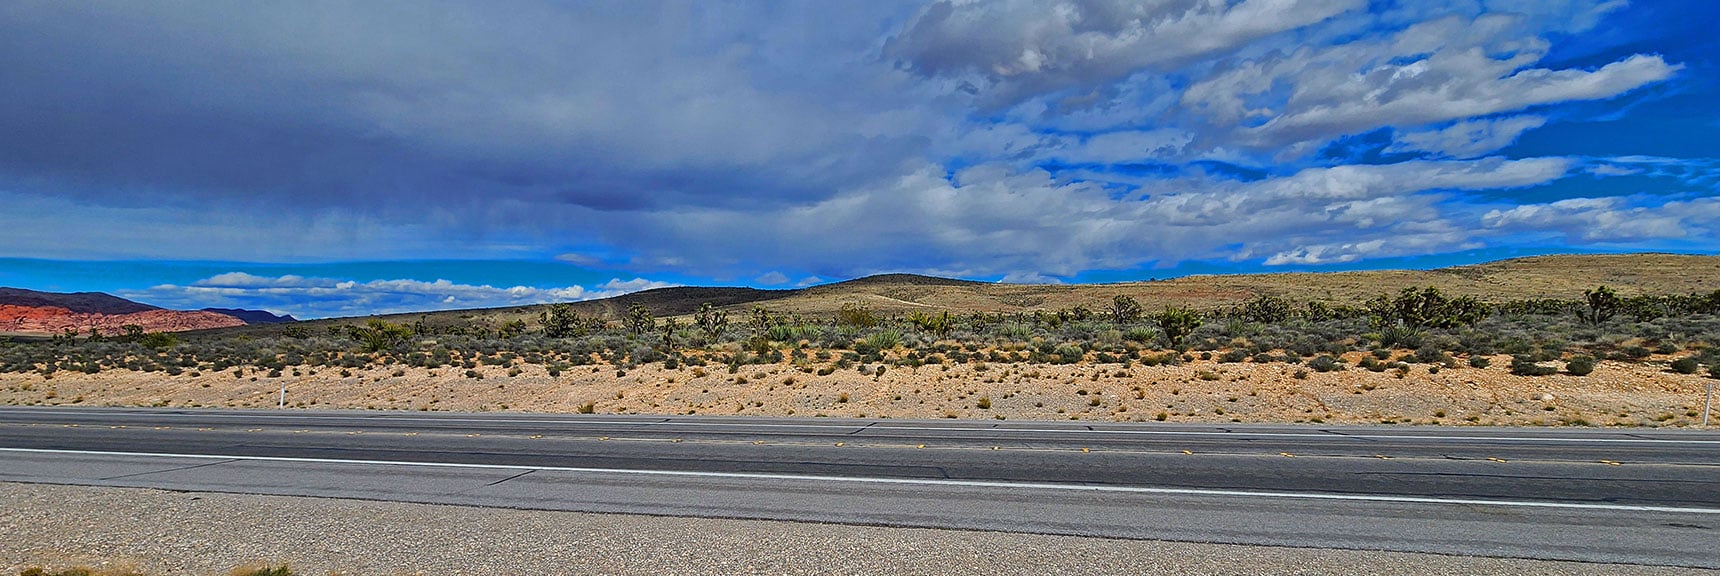 Now on Hwy 159 at Oak Creek Trailhead Viewing Western High Ridge | Western High Ridge | Blue Diamond Hill, Nevada